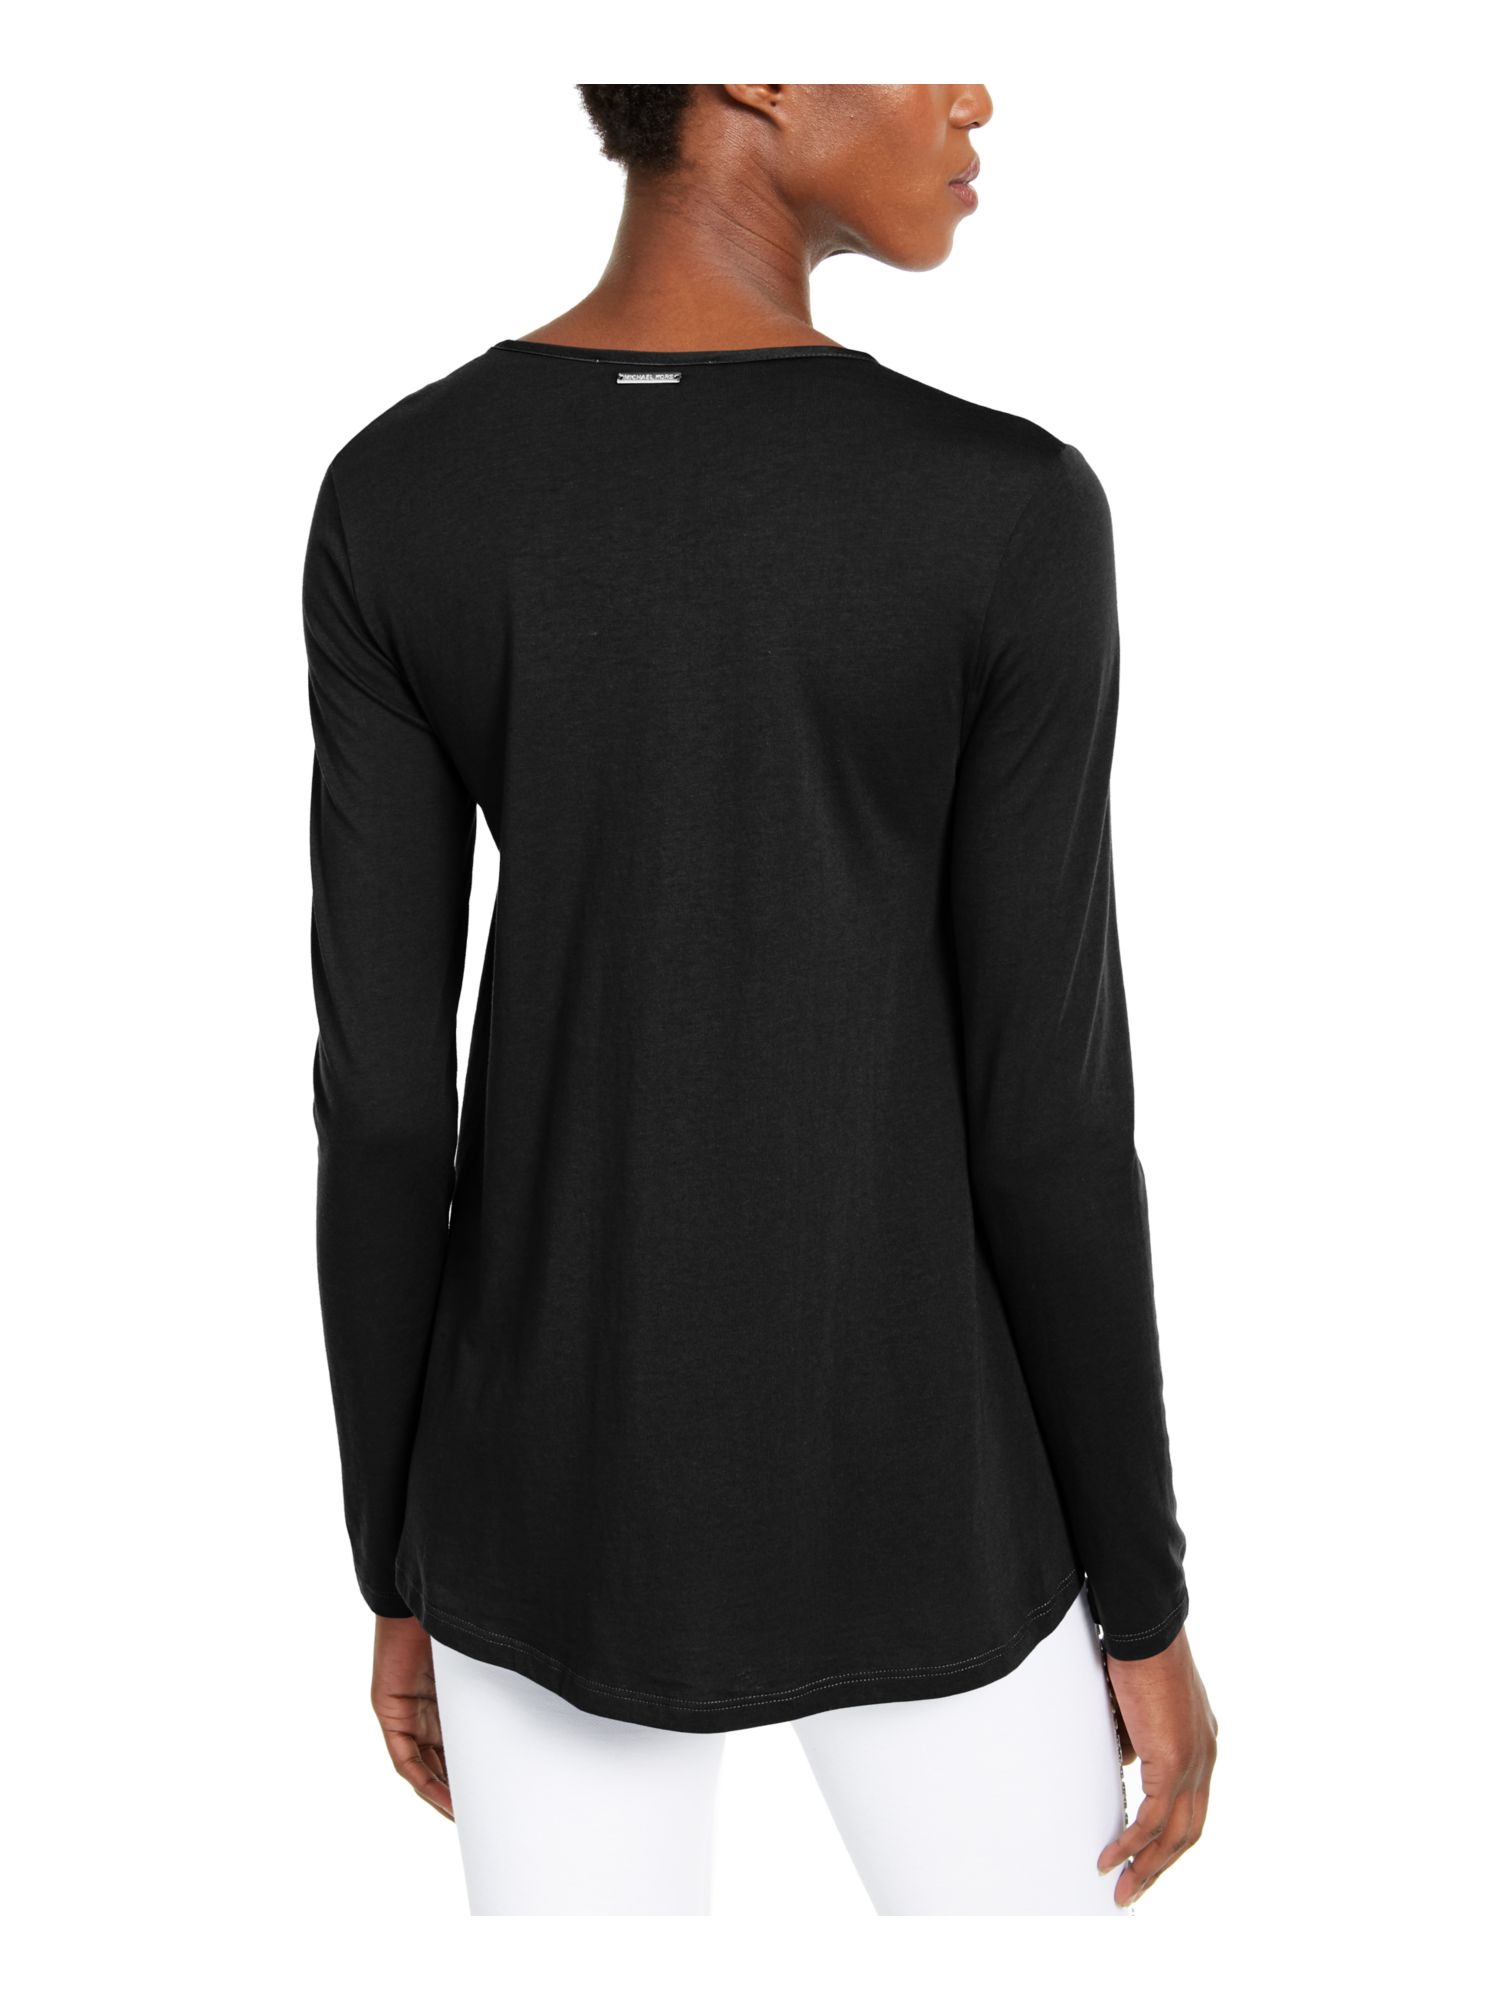 MICHAEL MICHAEL KORS Womens Black Long Sleeve Jewel Neck Top XS - image 2 of 2